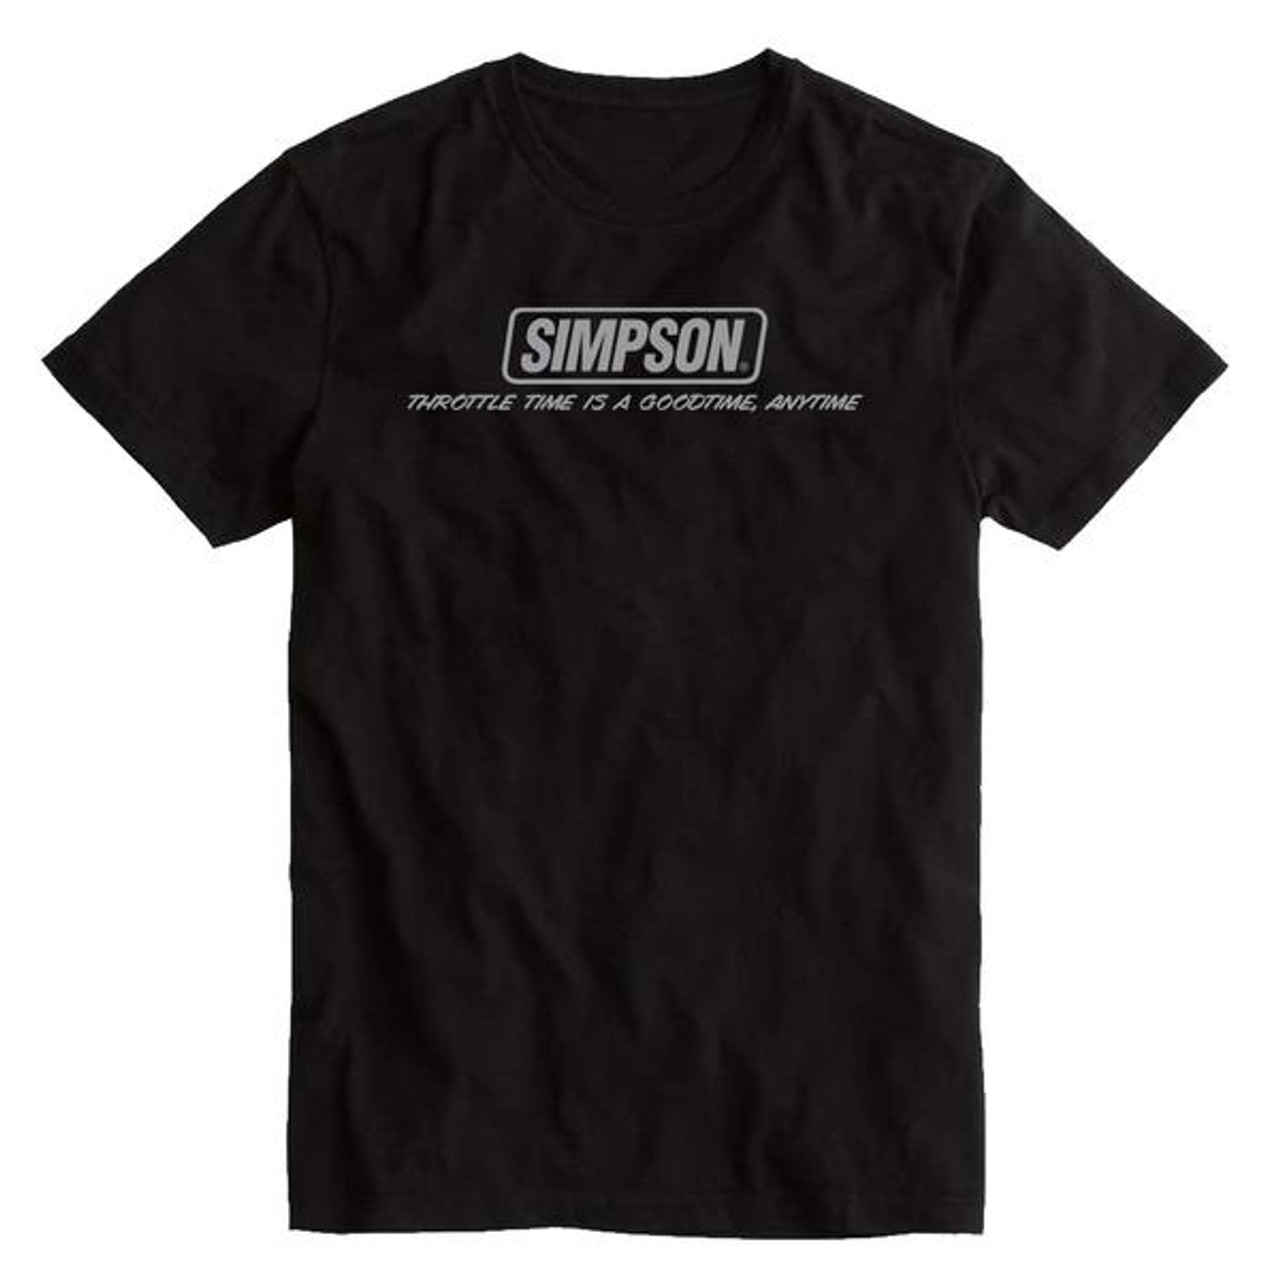 Simpson Throttle Time Tee T Shirt